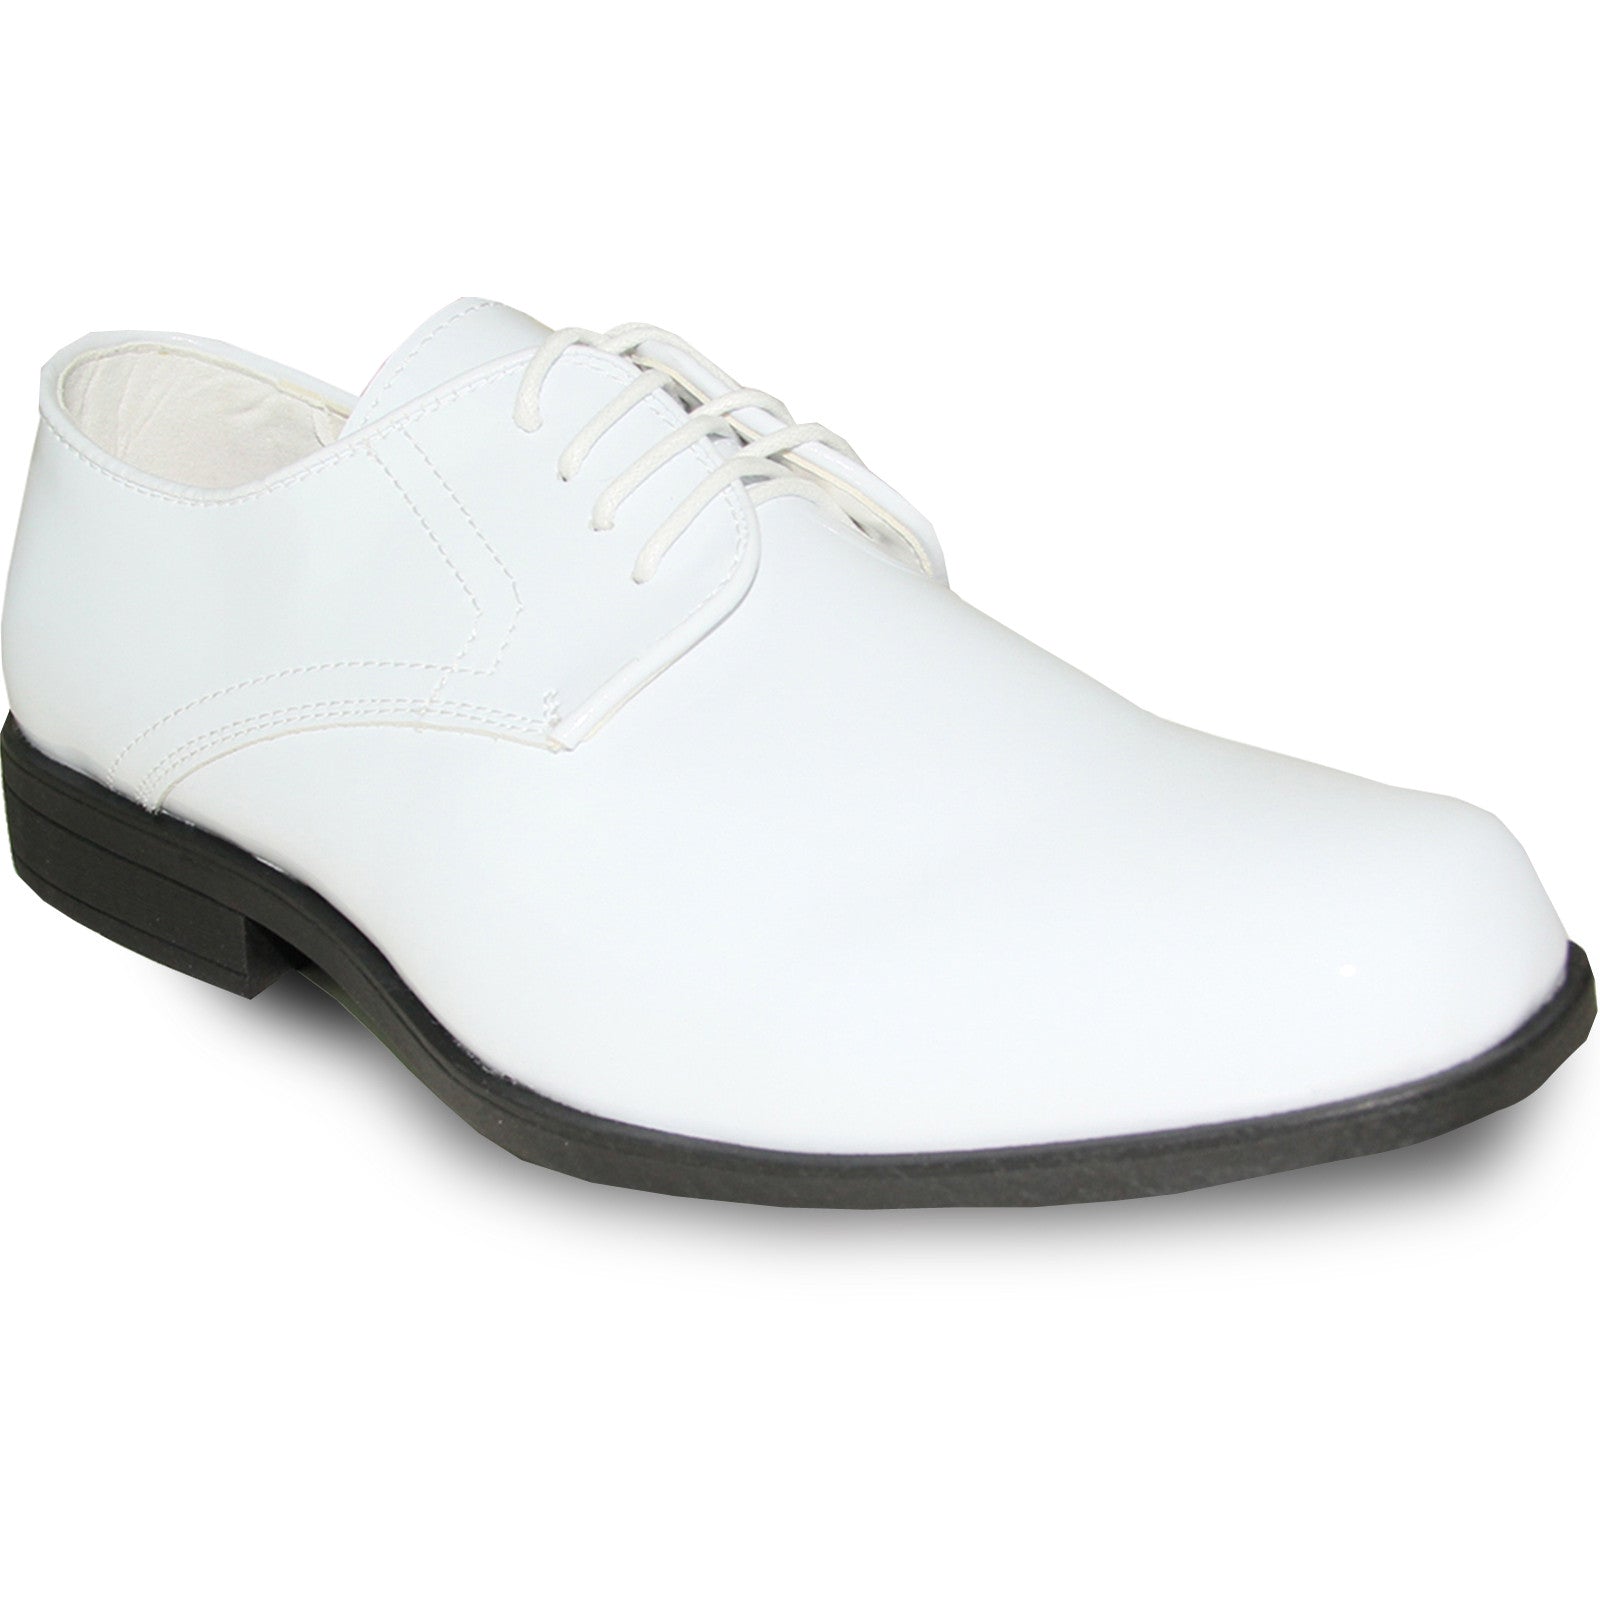 "White Men's Classic Patent Tuxedo Formal Shoe"